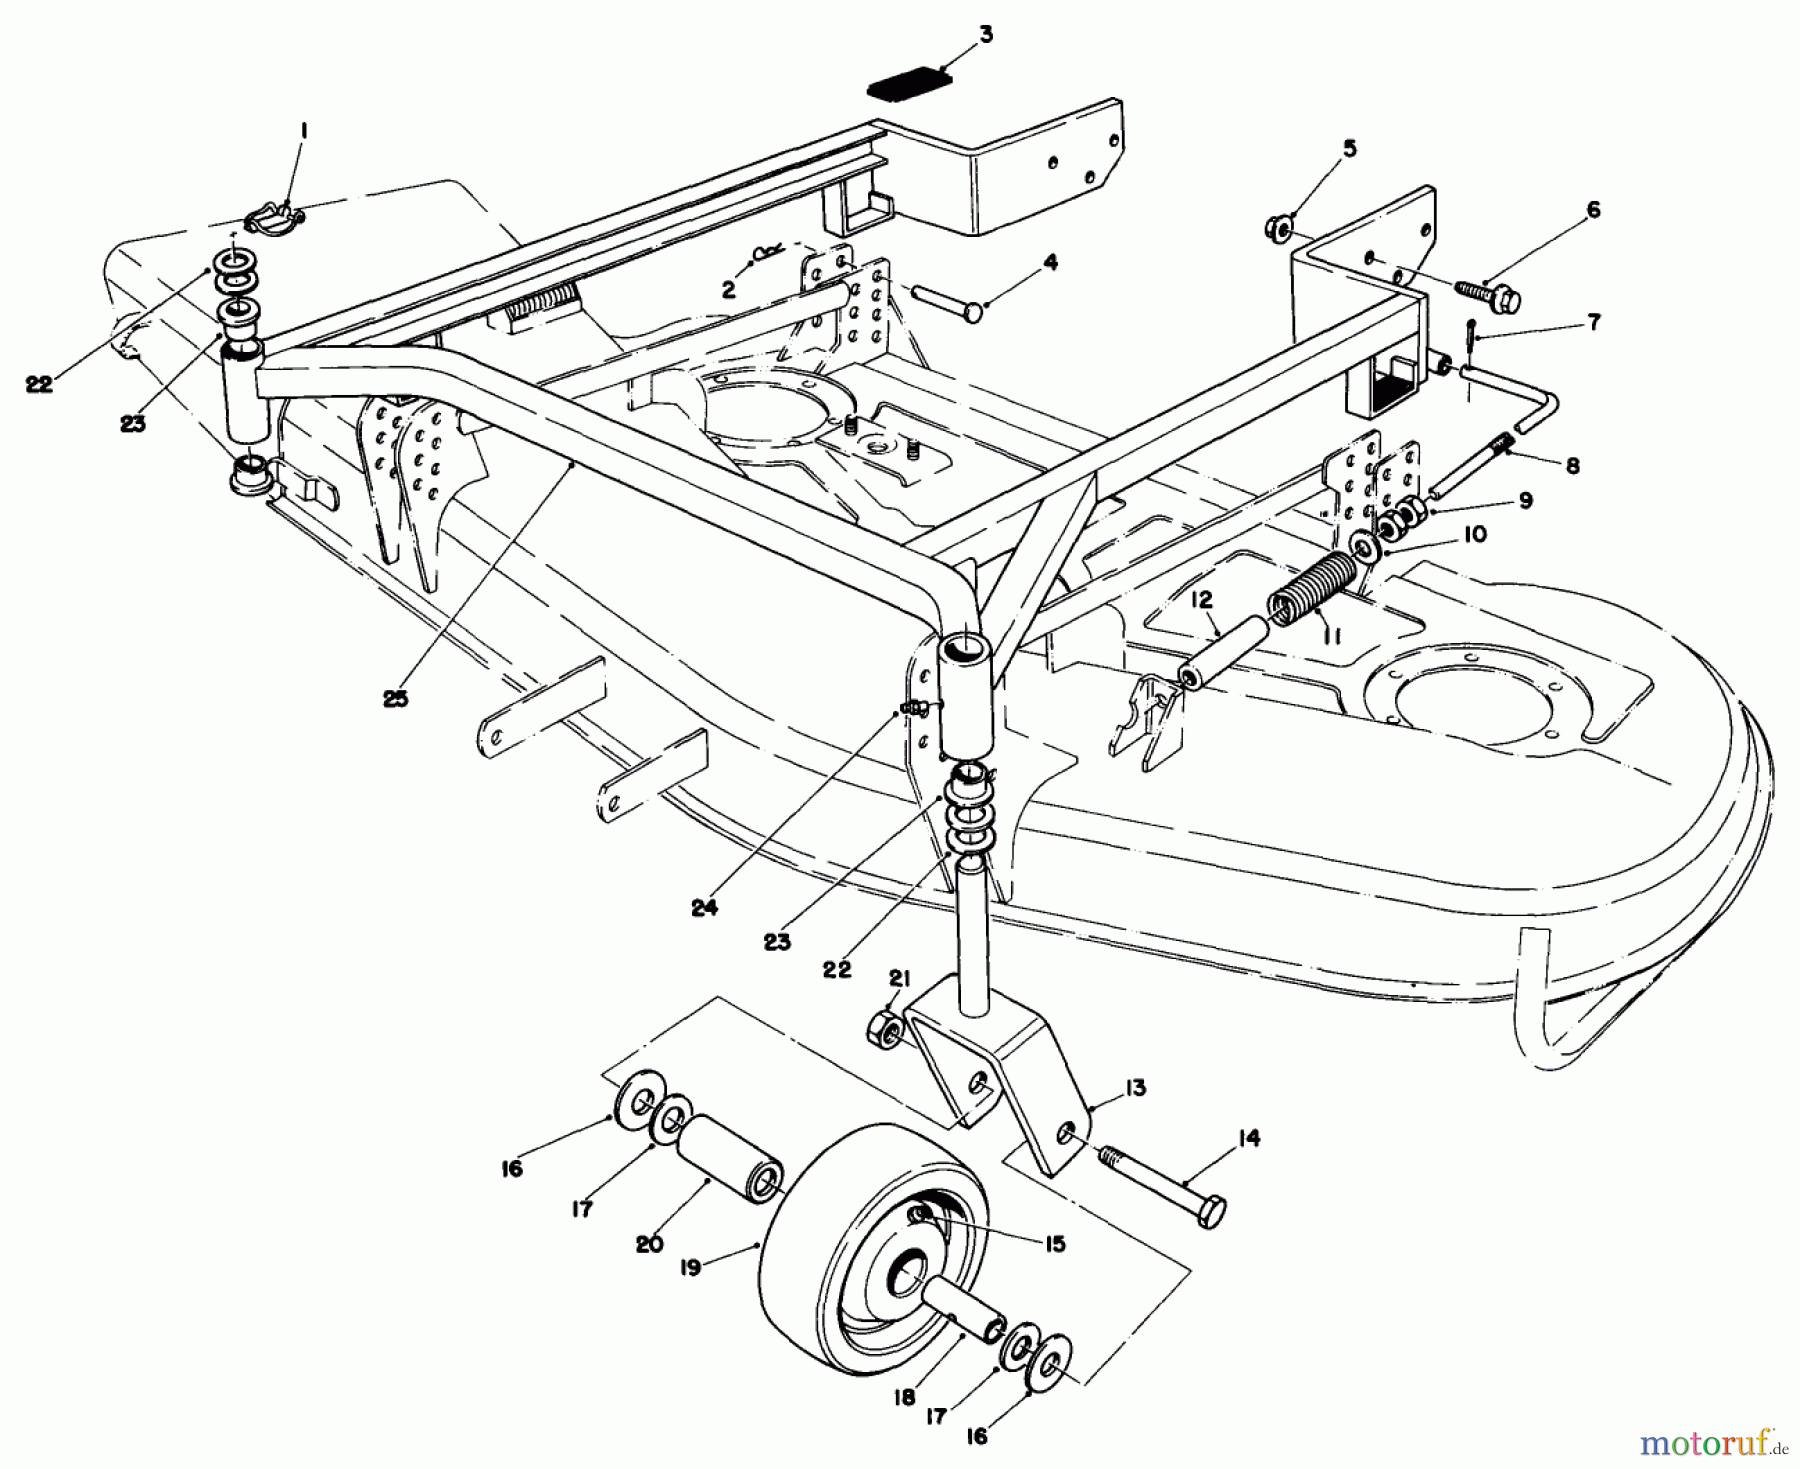  Toro Neu Mowers, Drive Unit Only 30111 - Toro Mid-Size Proline Gear Traction Unit, 11 hp, 1985 (5000001-5999999) 52